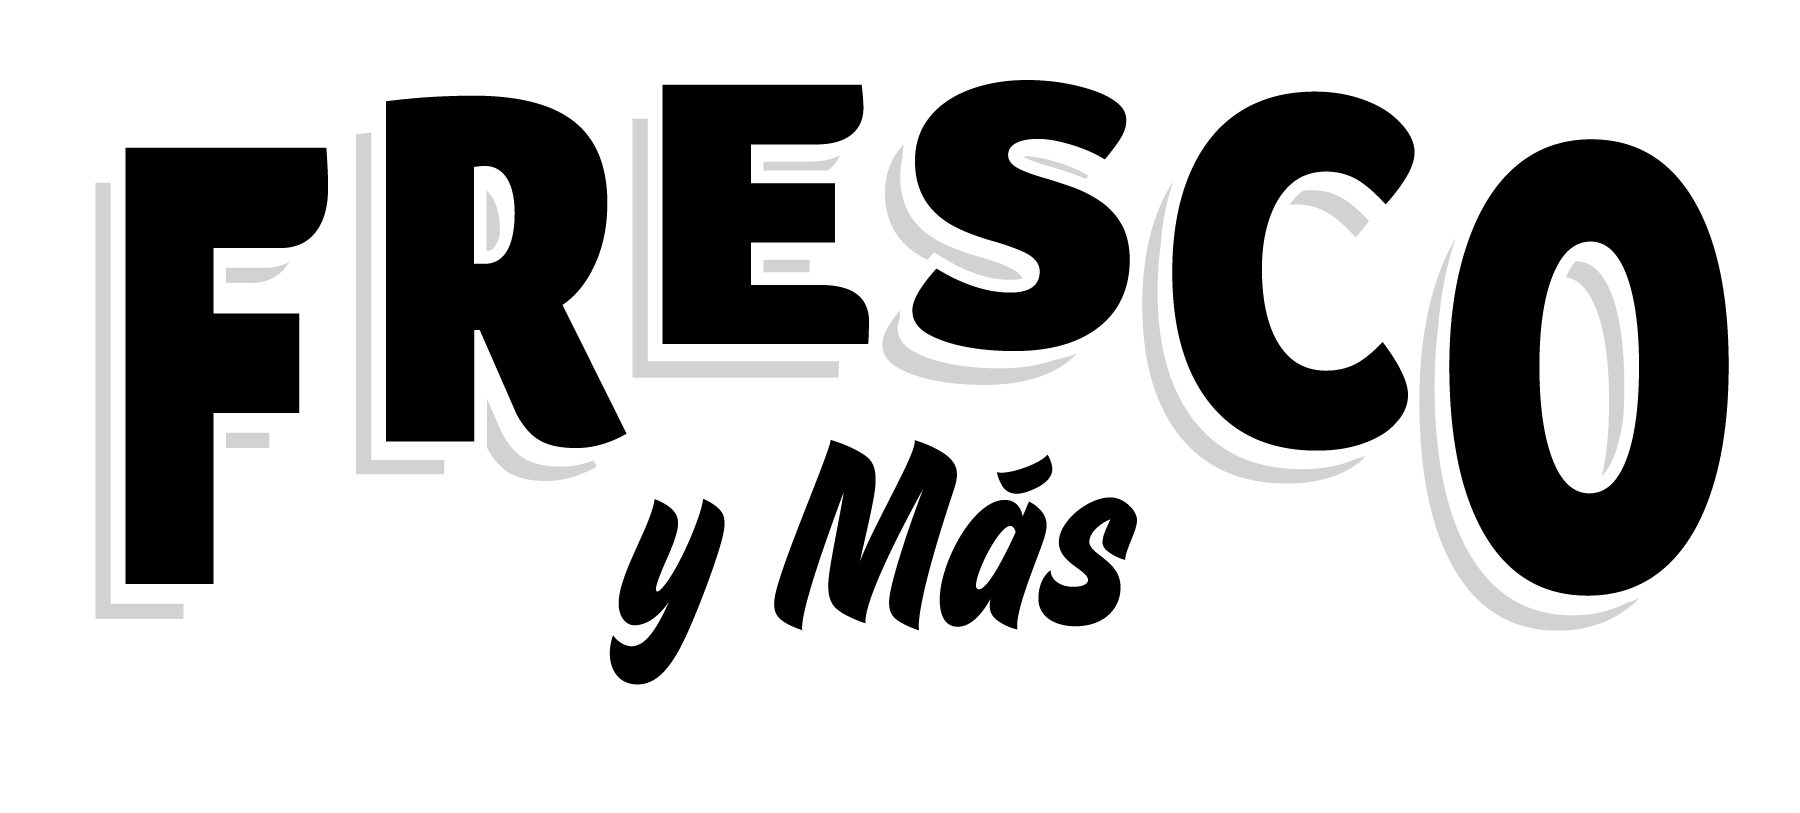 Fresco Logo - File:Fresco y mas logo.png